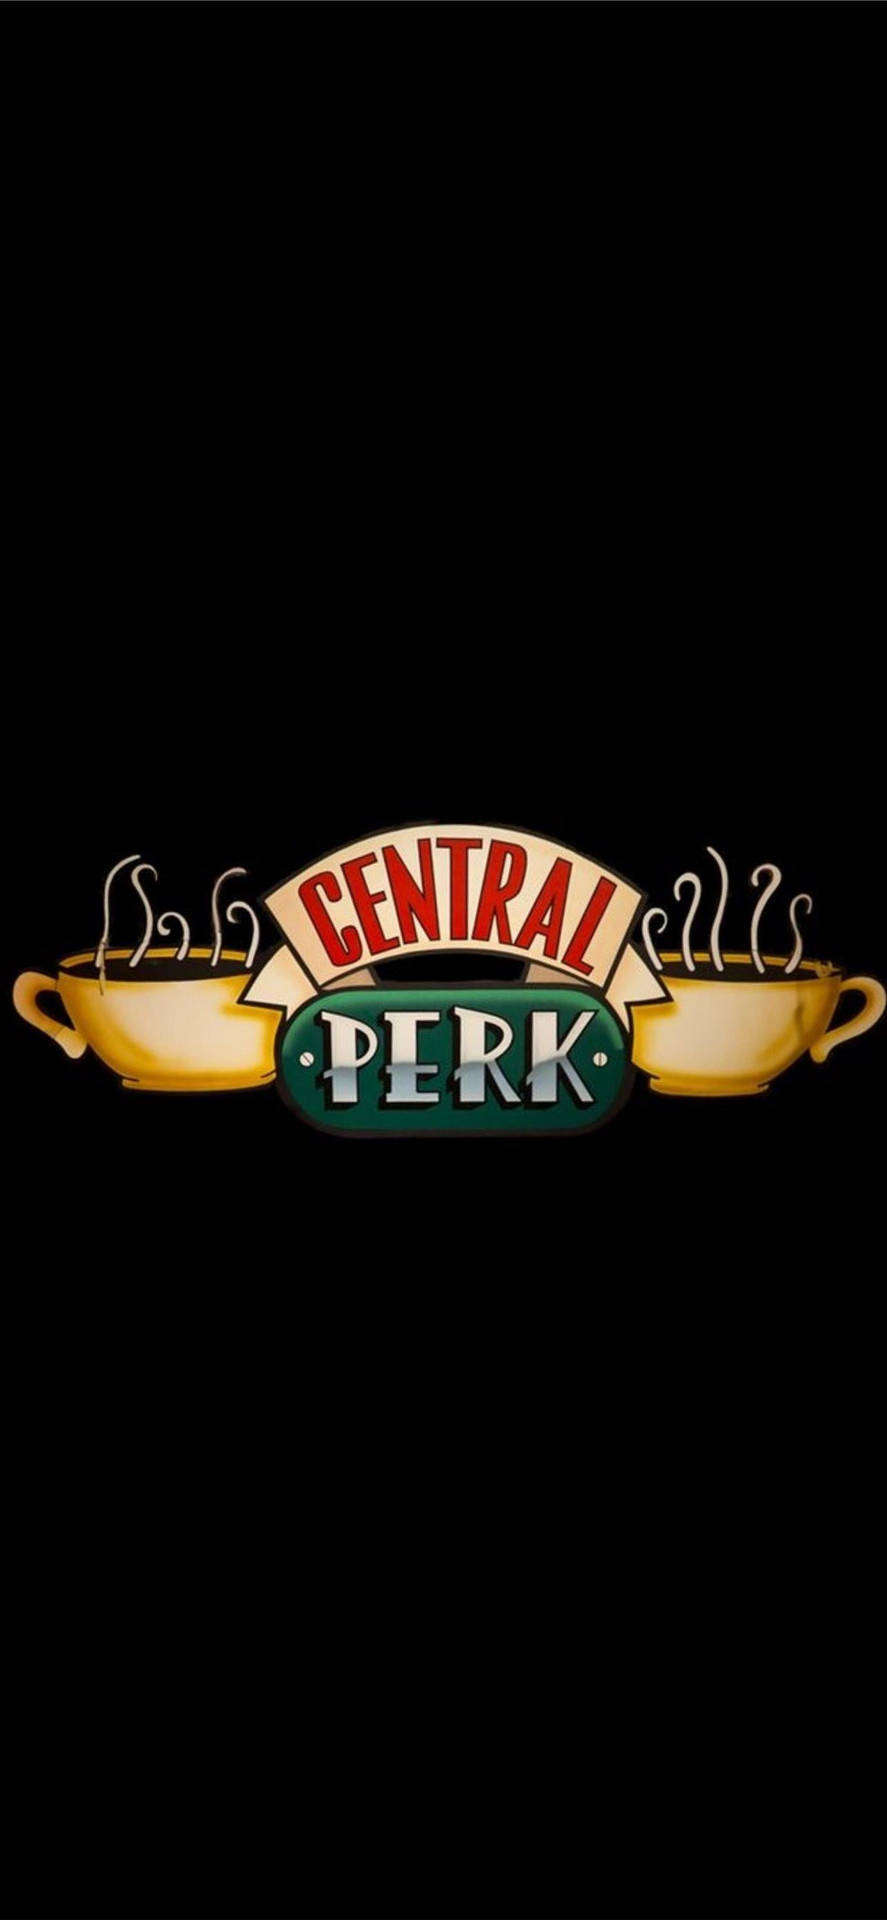 Venner Tv-show Central Perk Logo Wallpaper